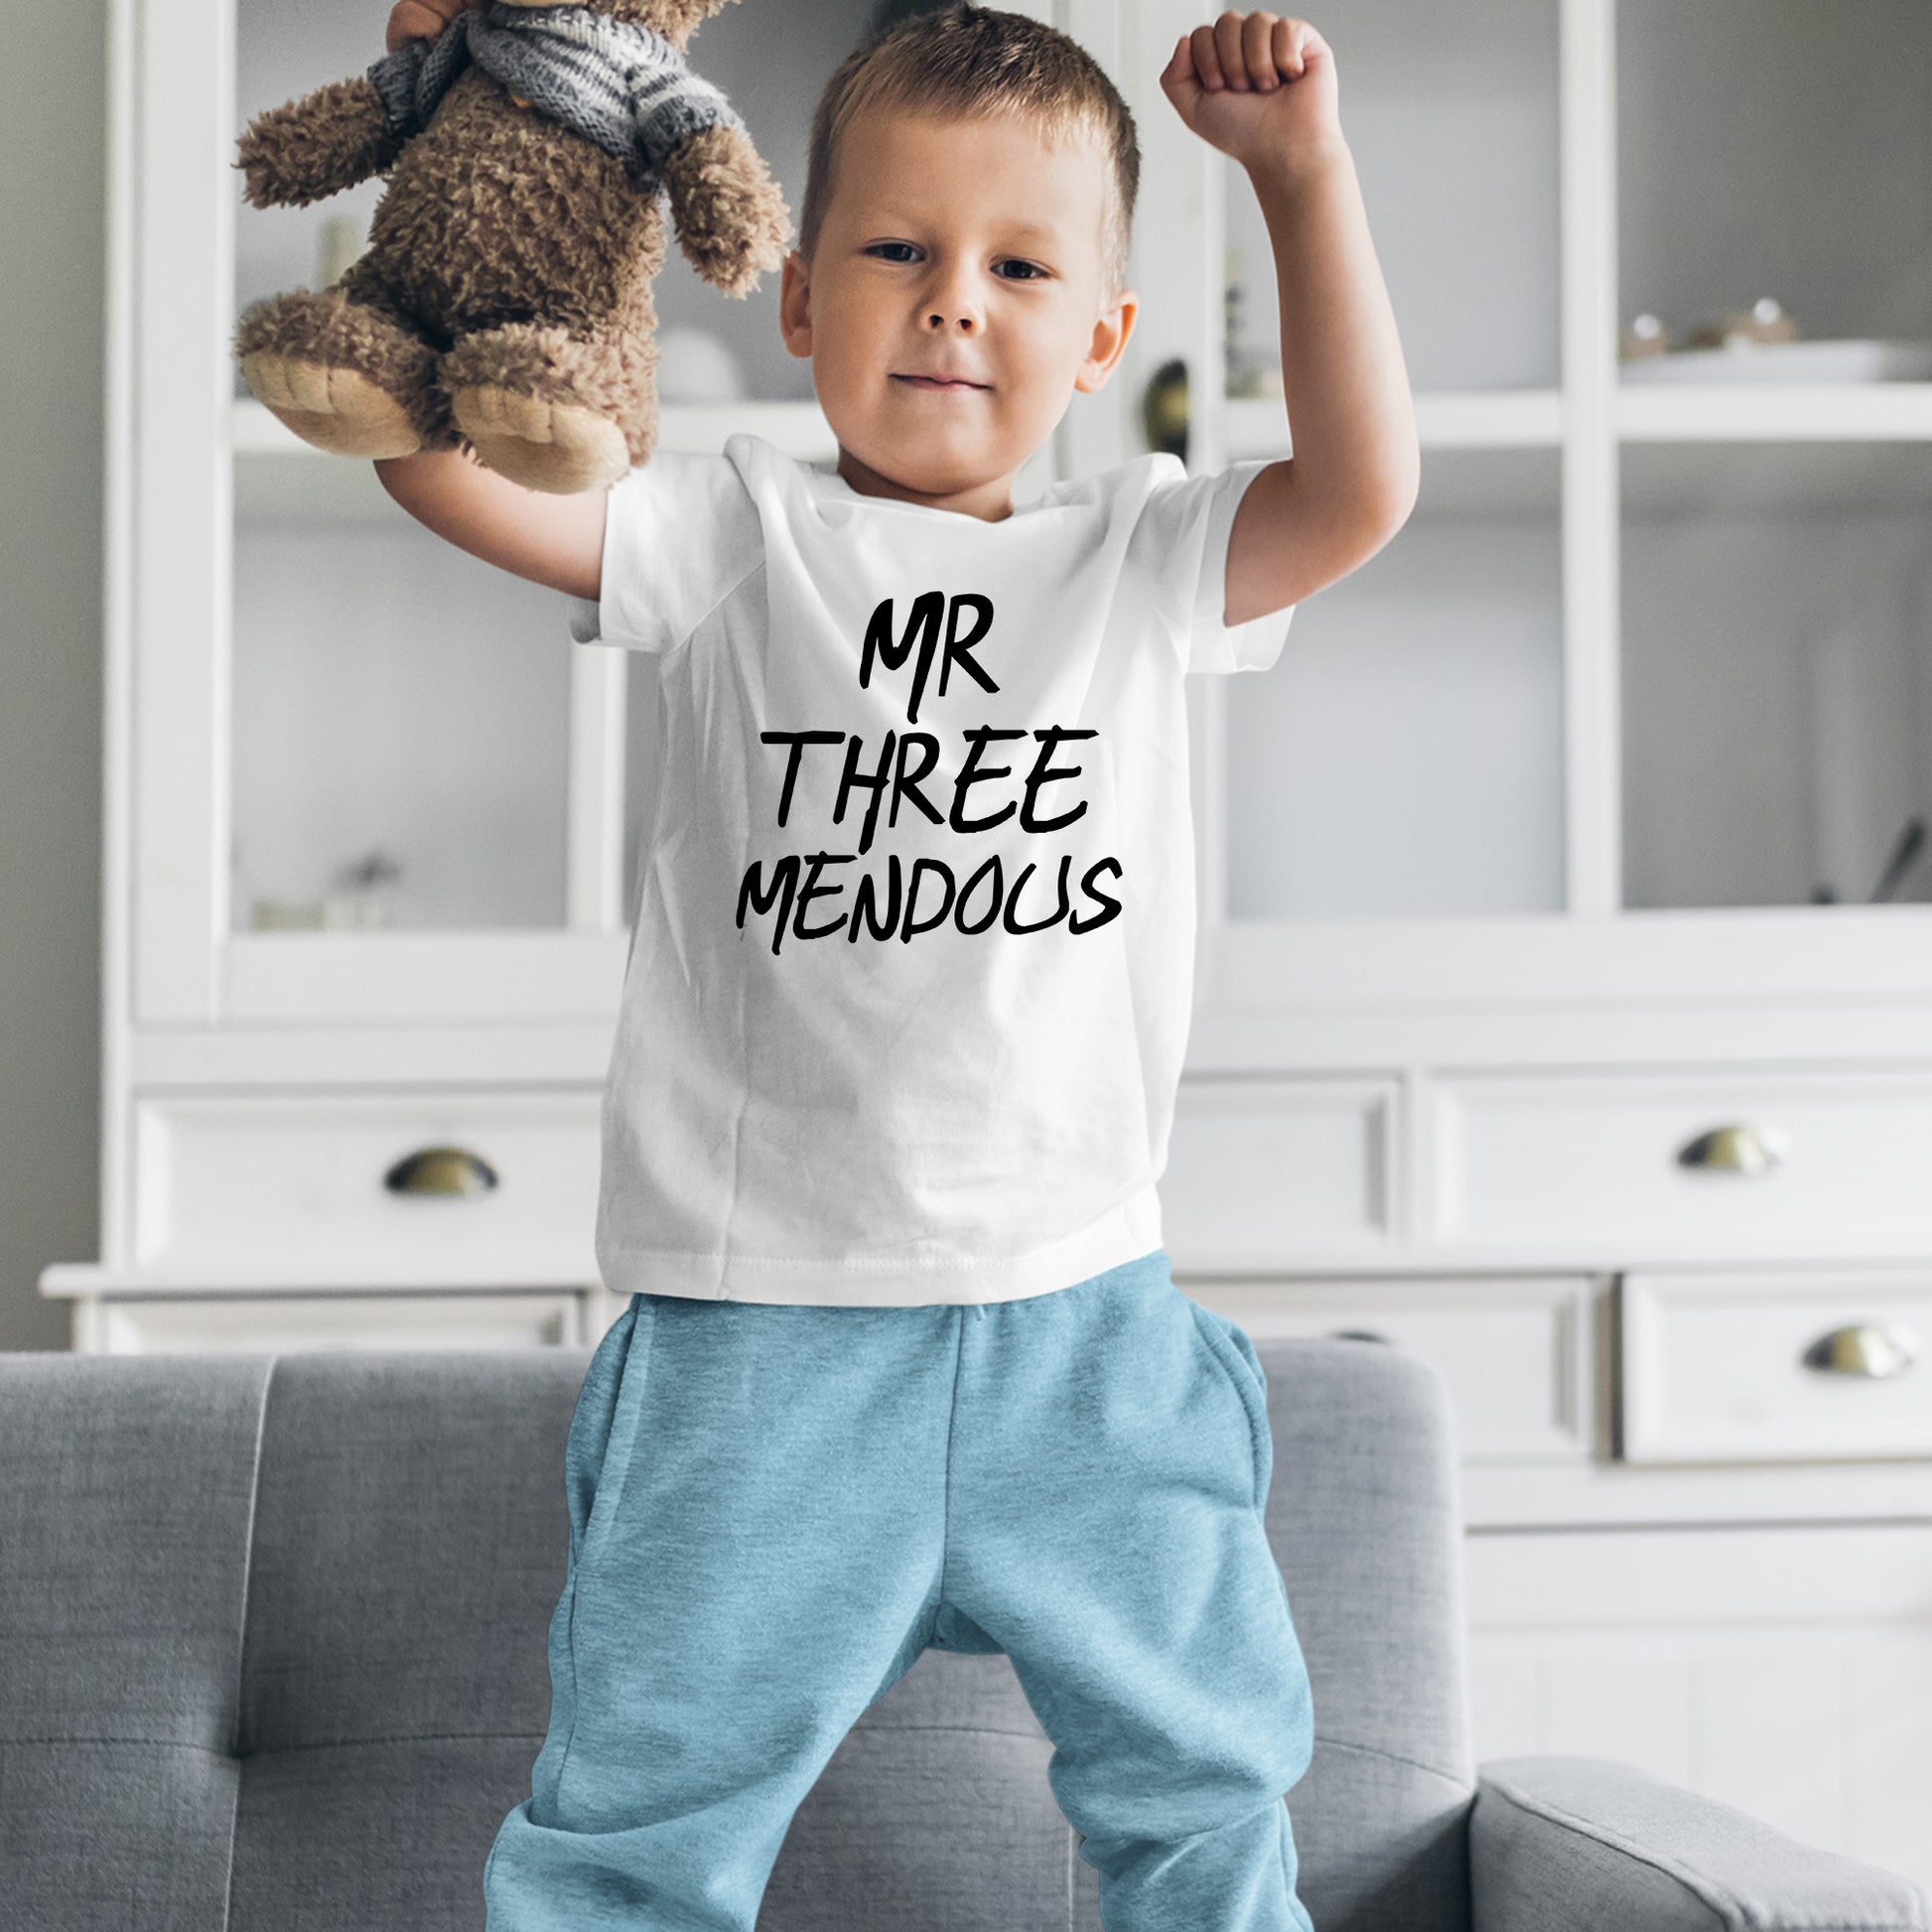 Mr Three Mendous Birthday Shirt